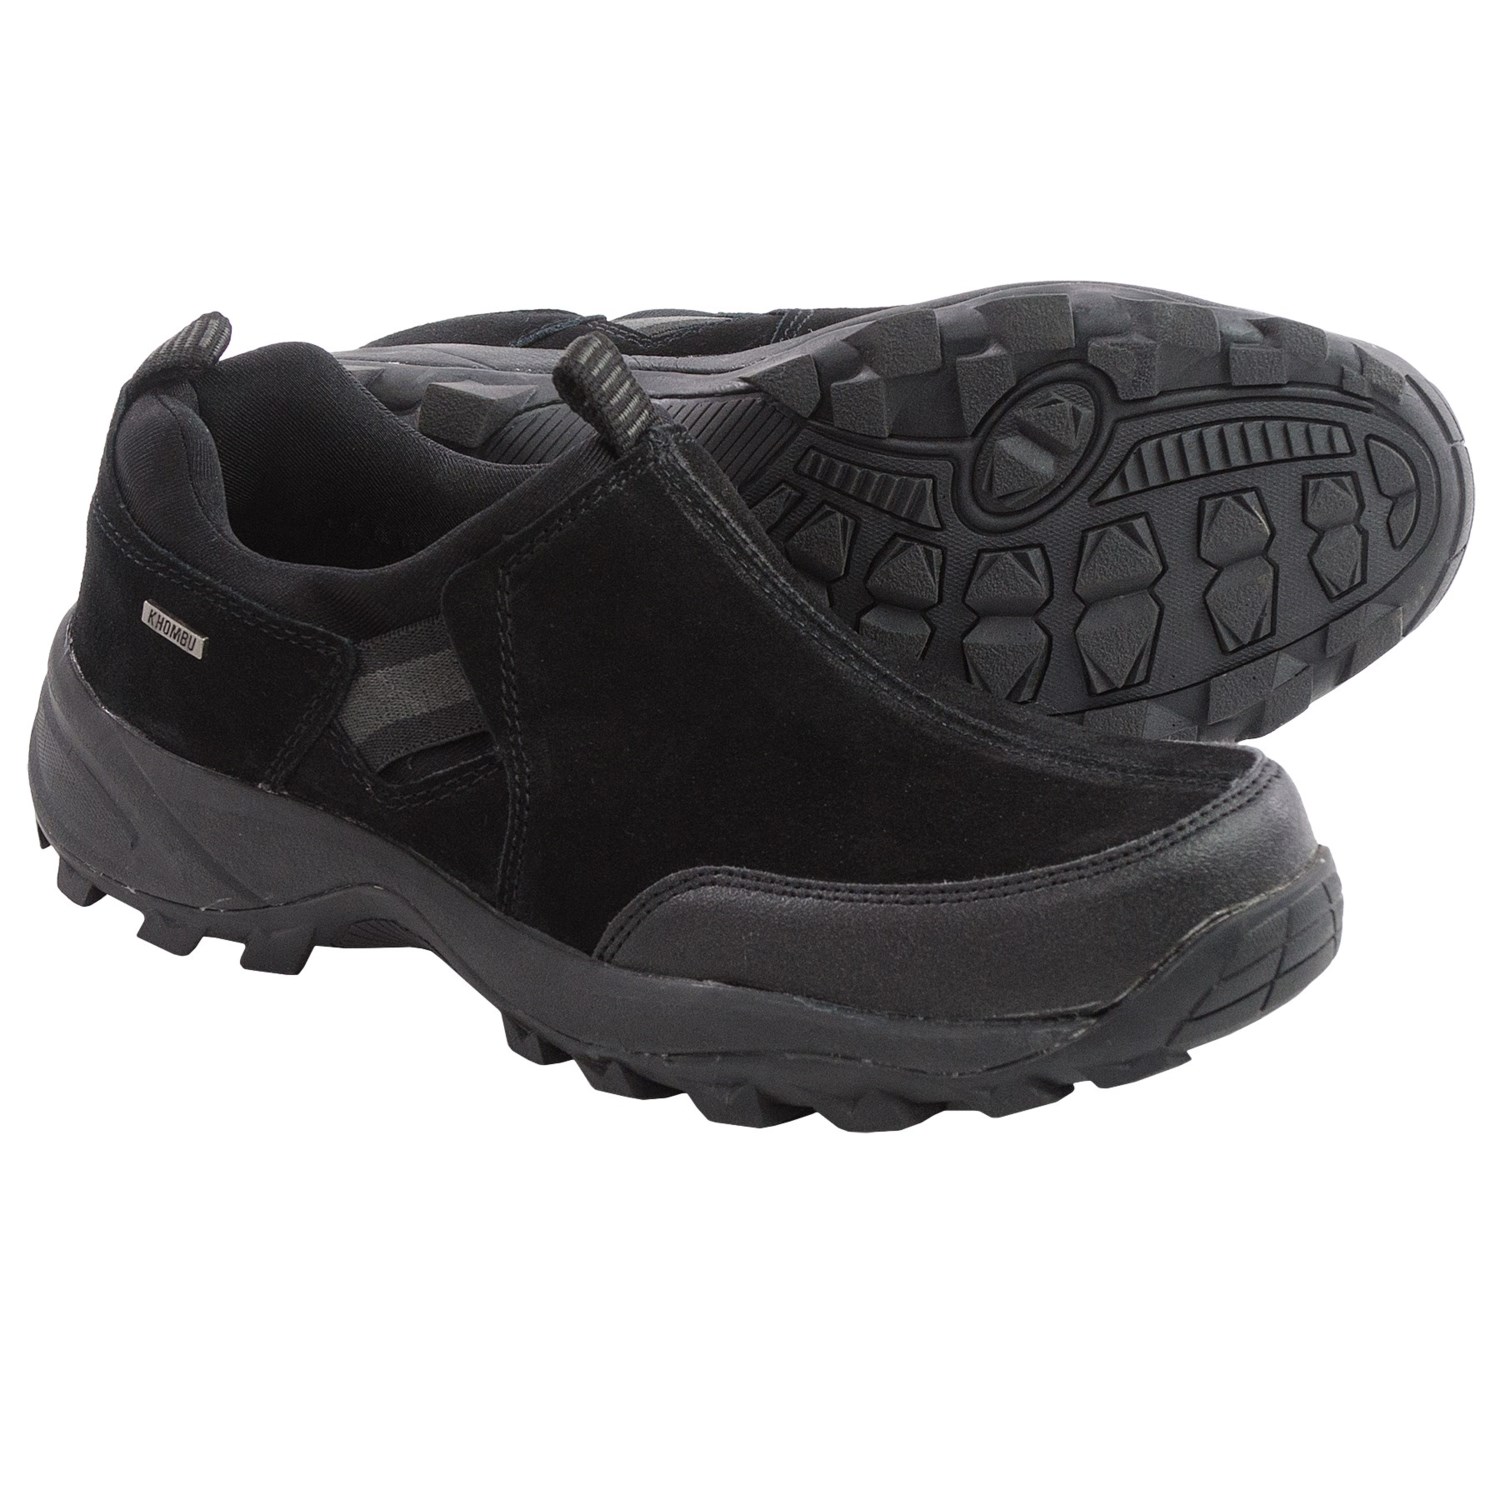 Khombu Tamarack Shoes (For Men) - Save 36%